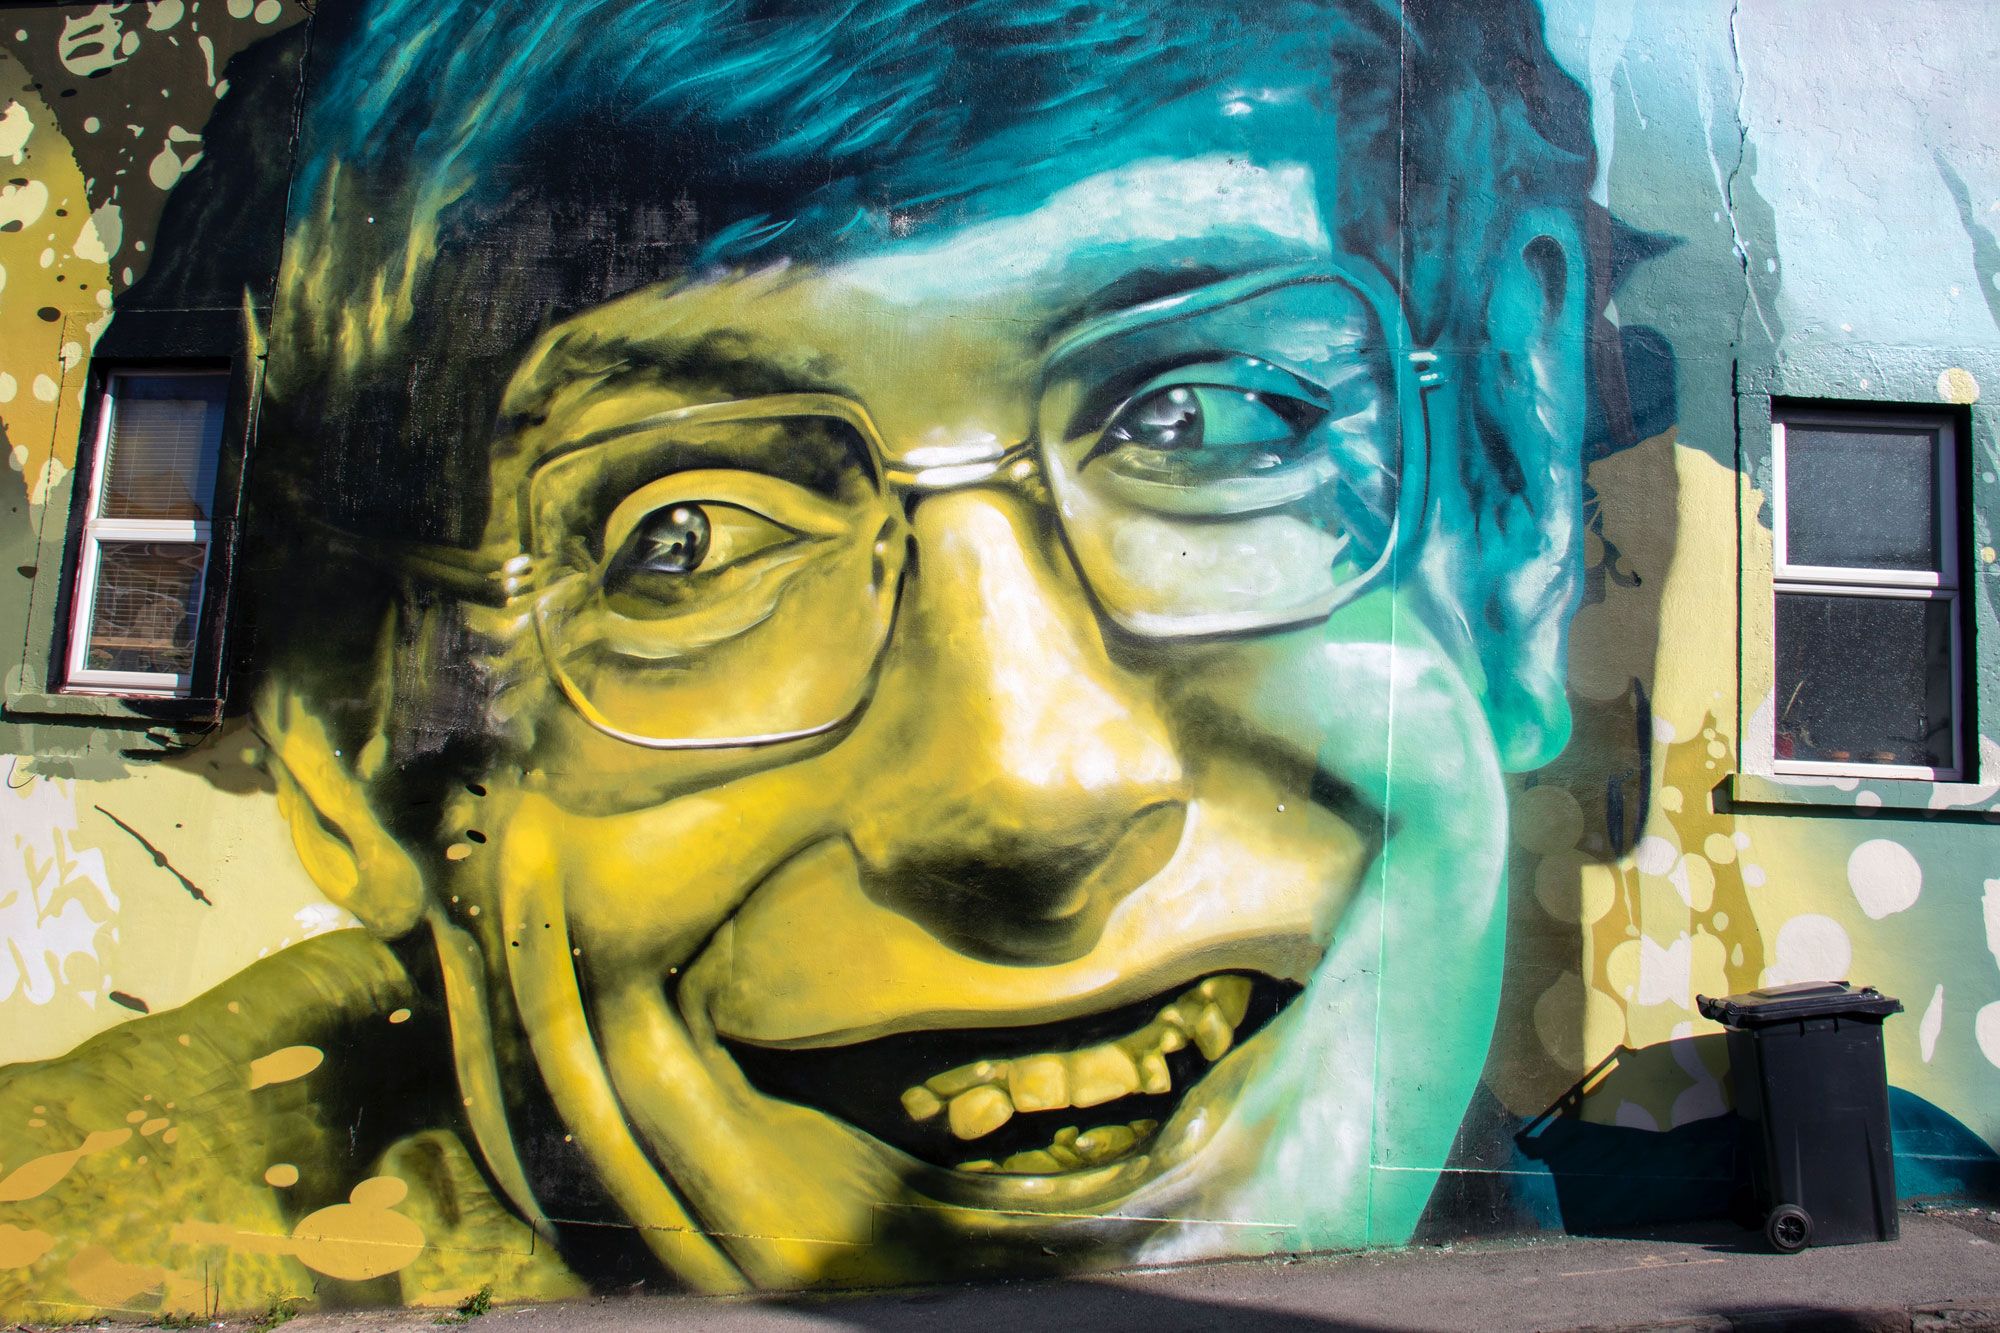 Wall mural by Stephen Hawking